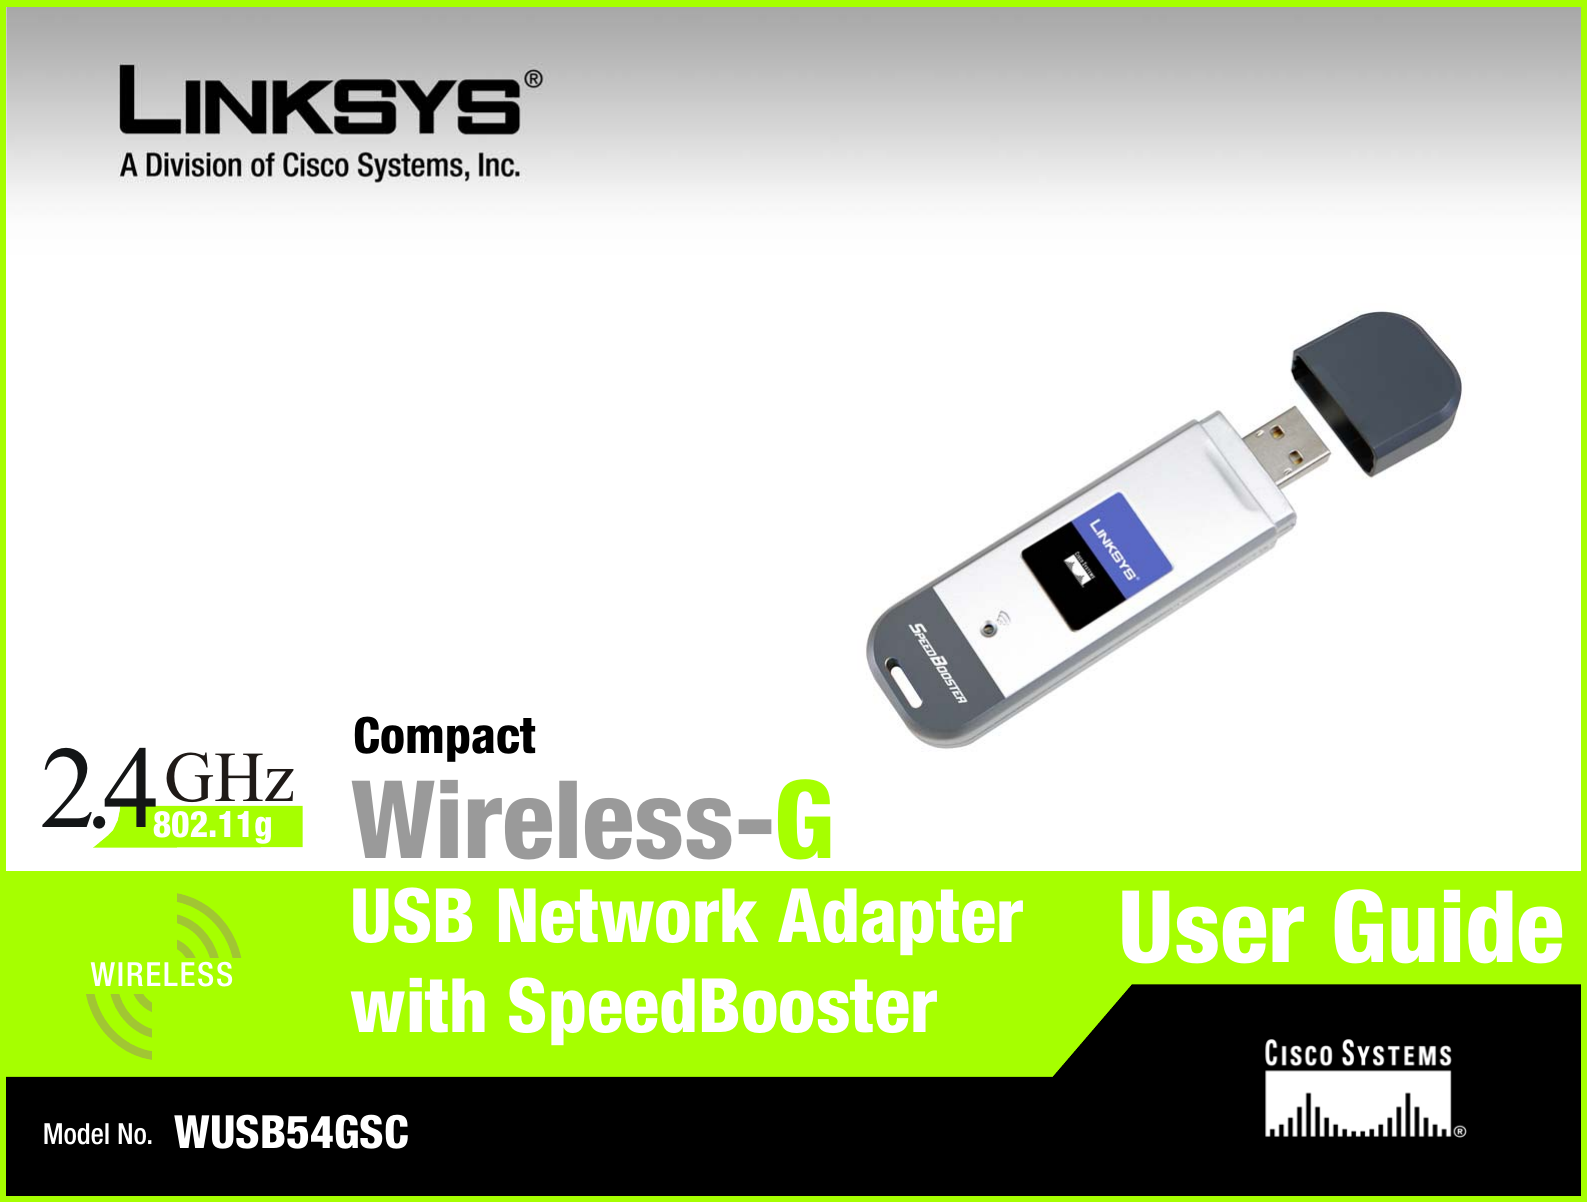 Model No.USB Network AdapterWireless-GWUSB54GSCUser GuideWIRELESSGHz2.4802.11gCompactwith SpeedBooster